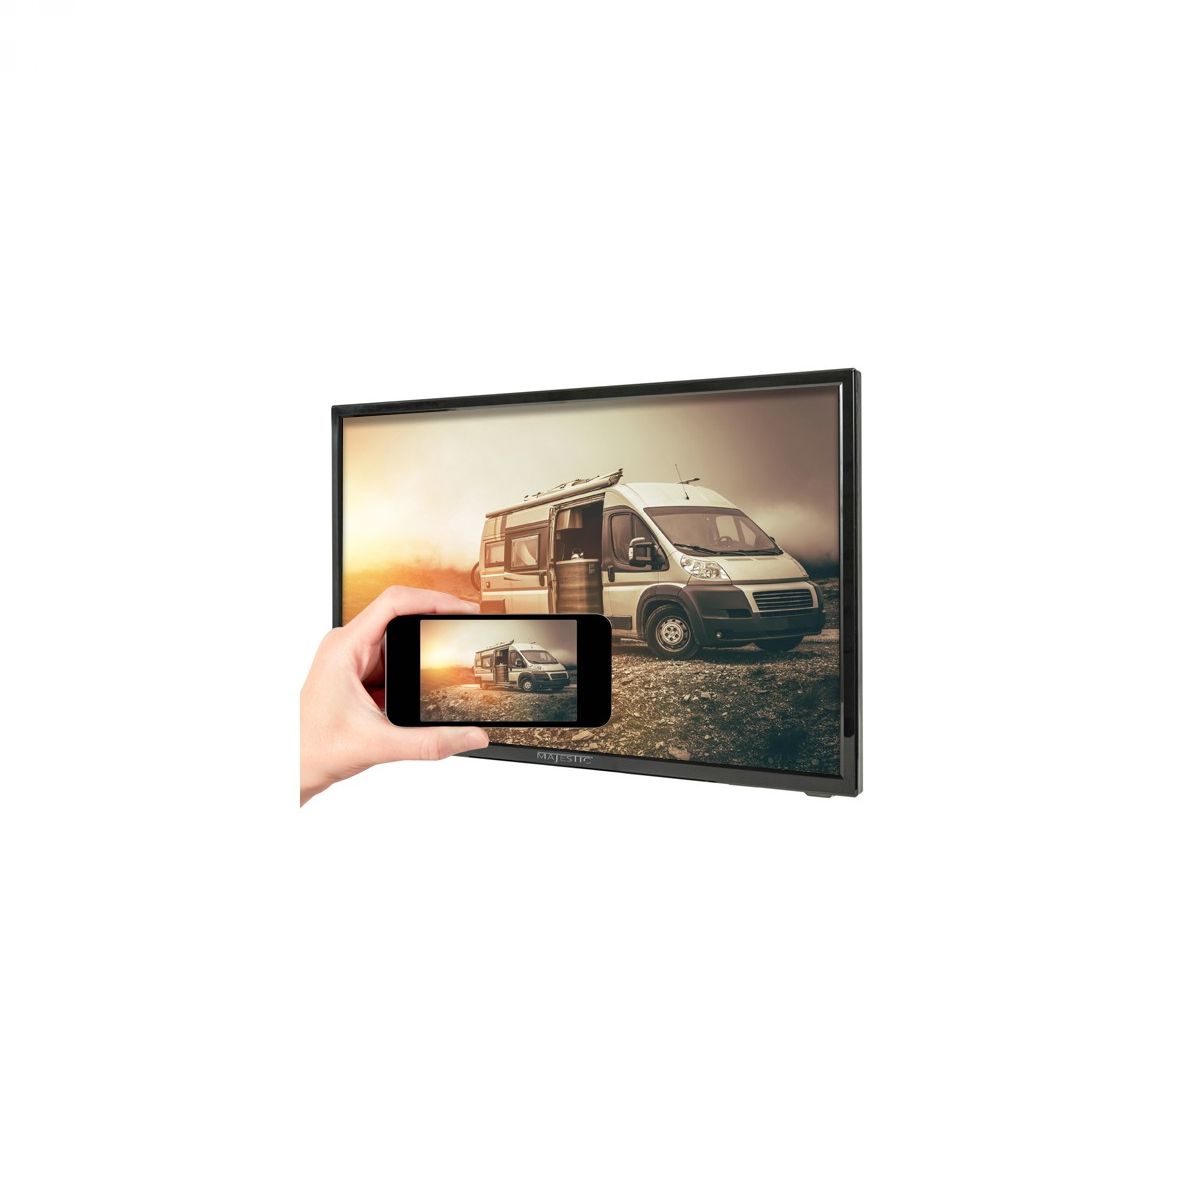 Majestic SLT241 Smart LED TV 12V 24” Full HD Android